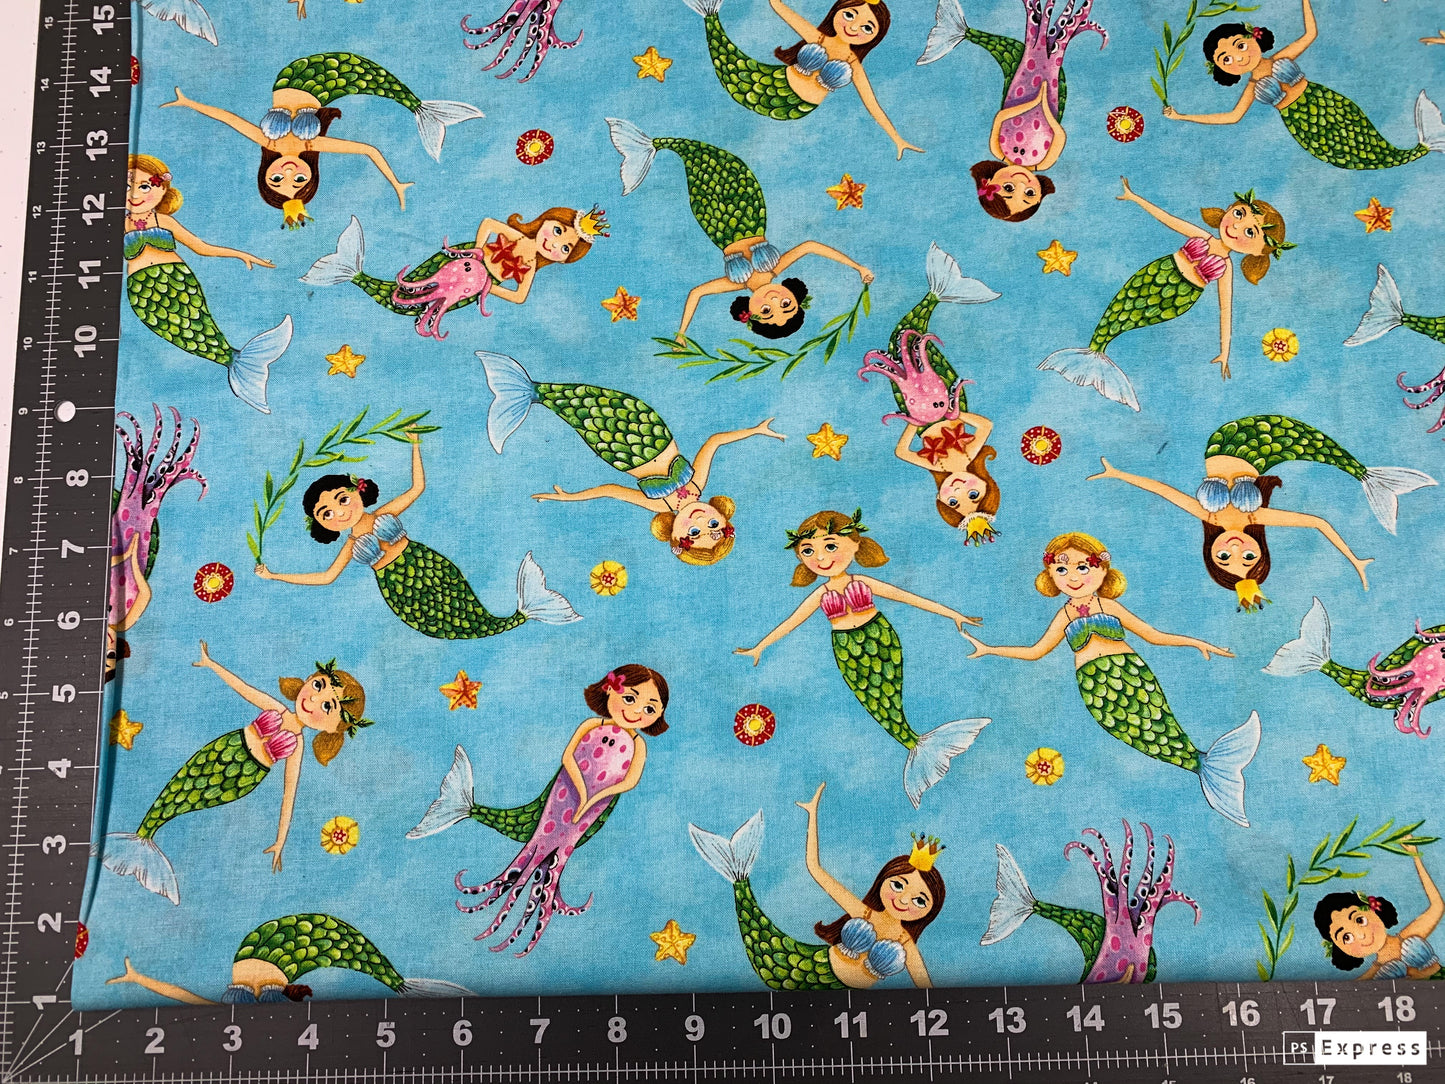 Cute Mermaid fabric 17003 Mermaids playing in the ocean fabric